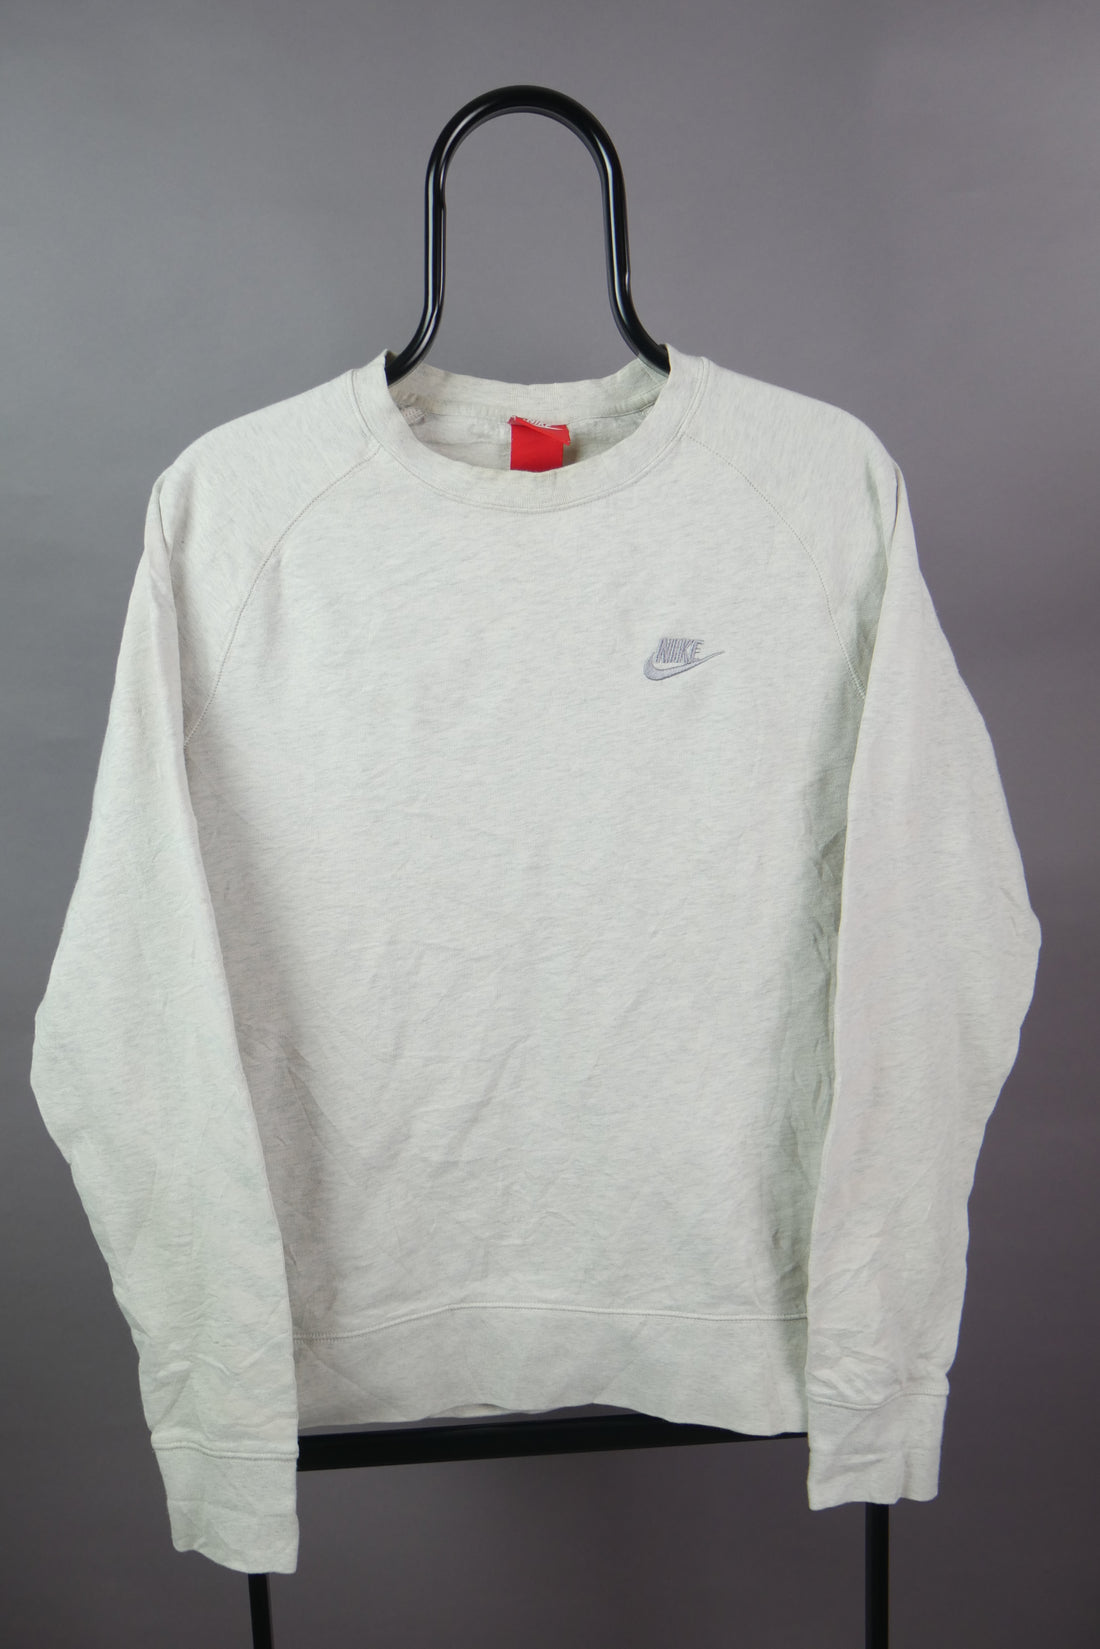 The Nike Sweatshirt (M)